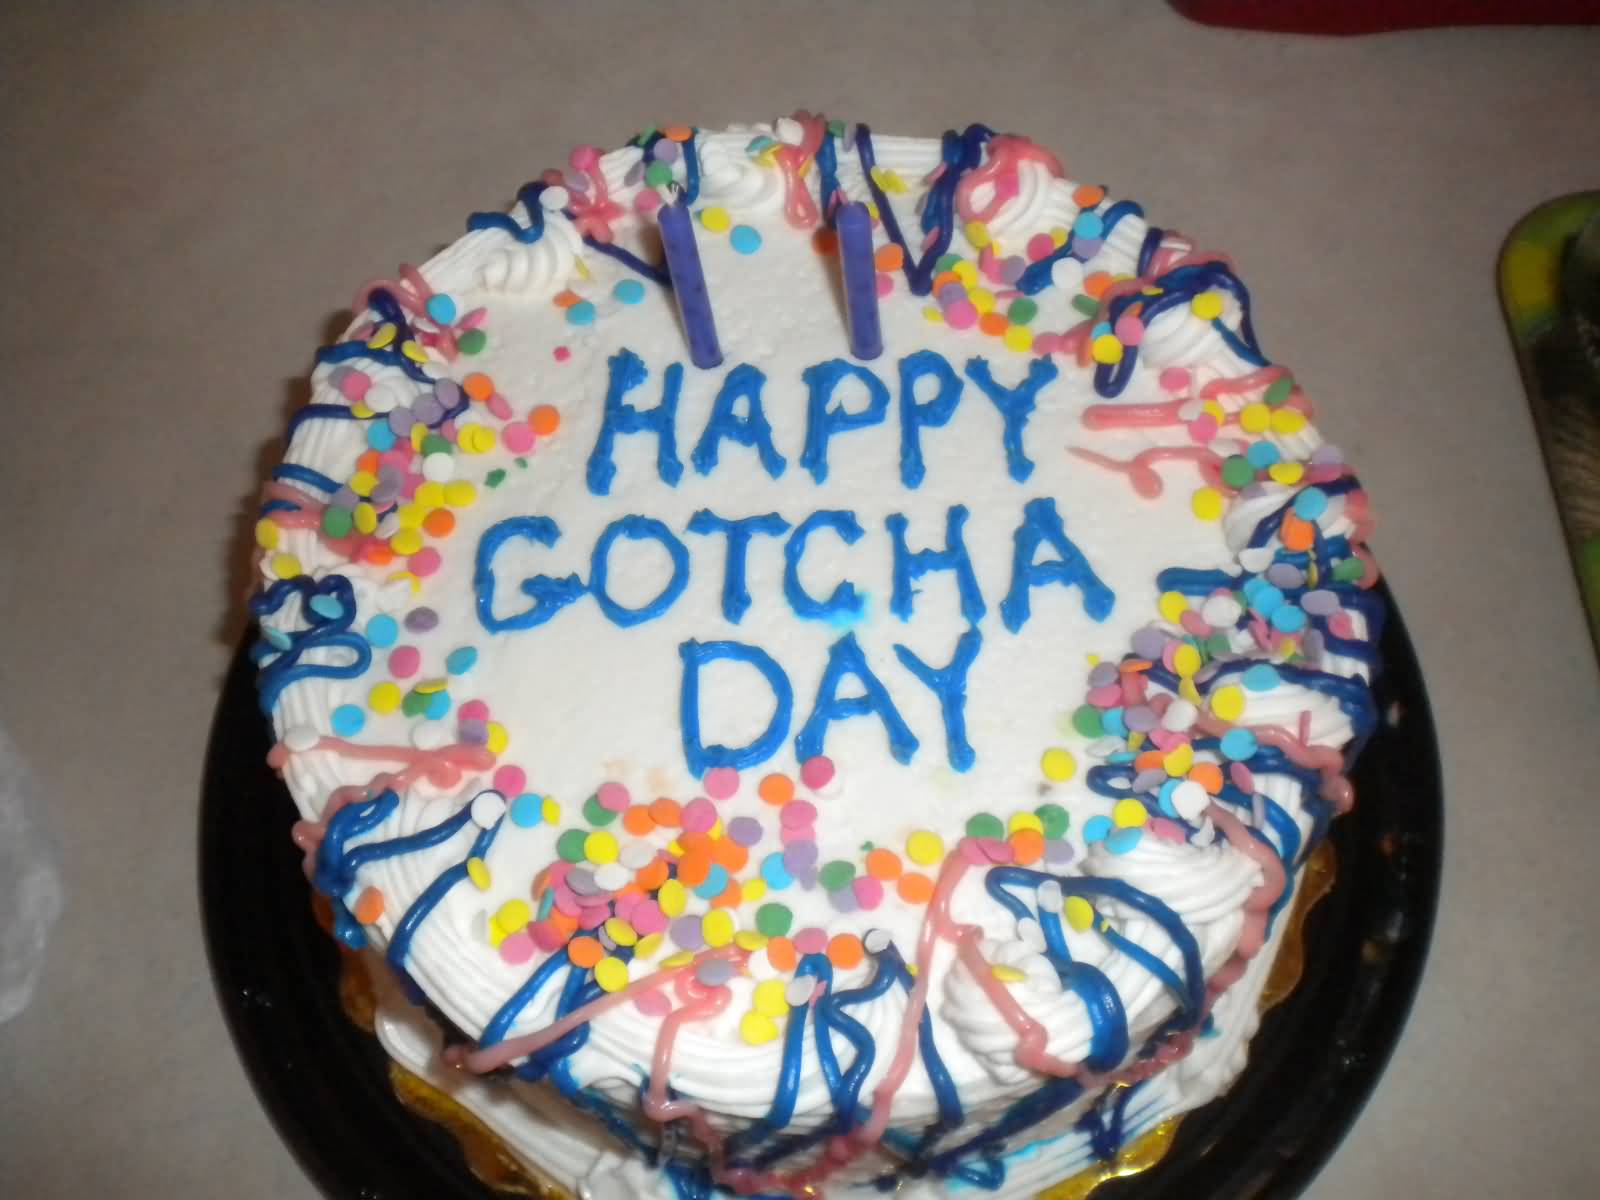 Happy Gotcha Day Cake Picture